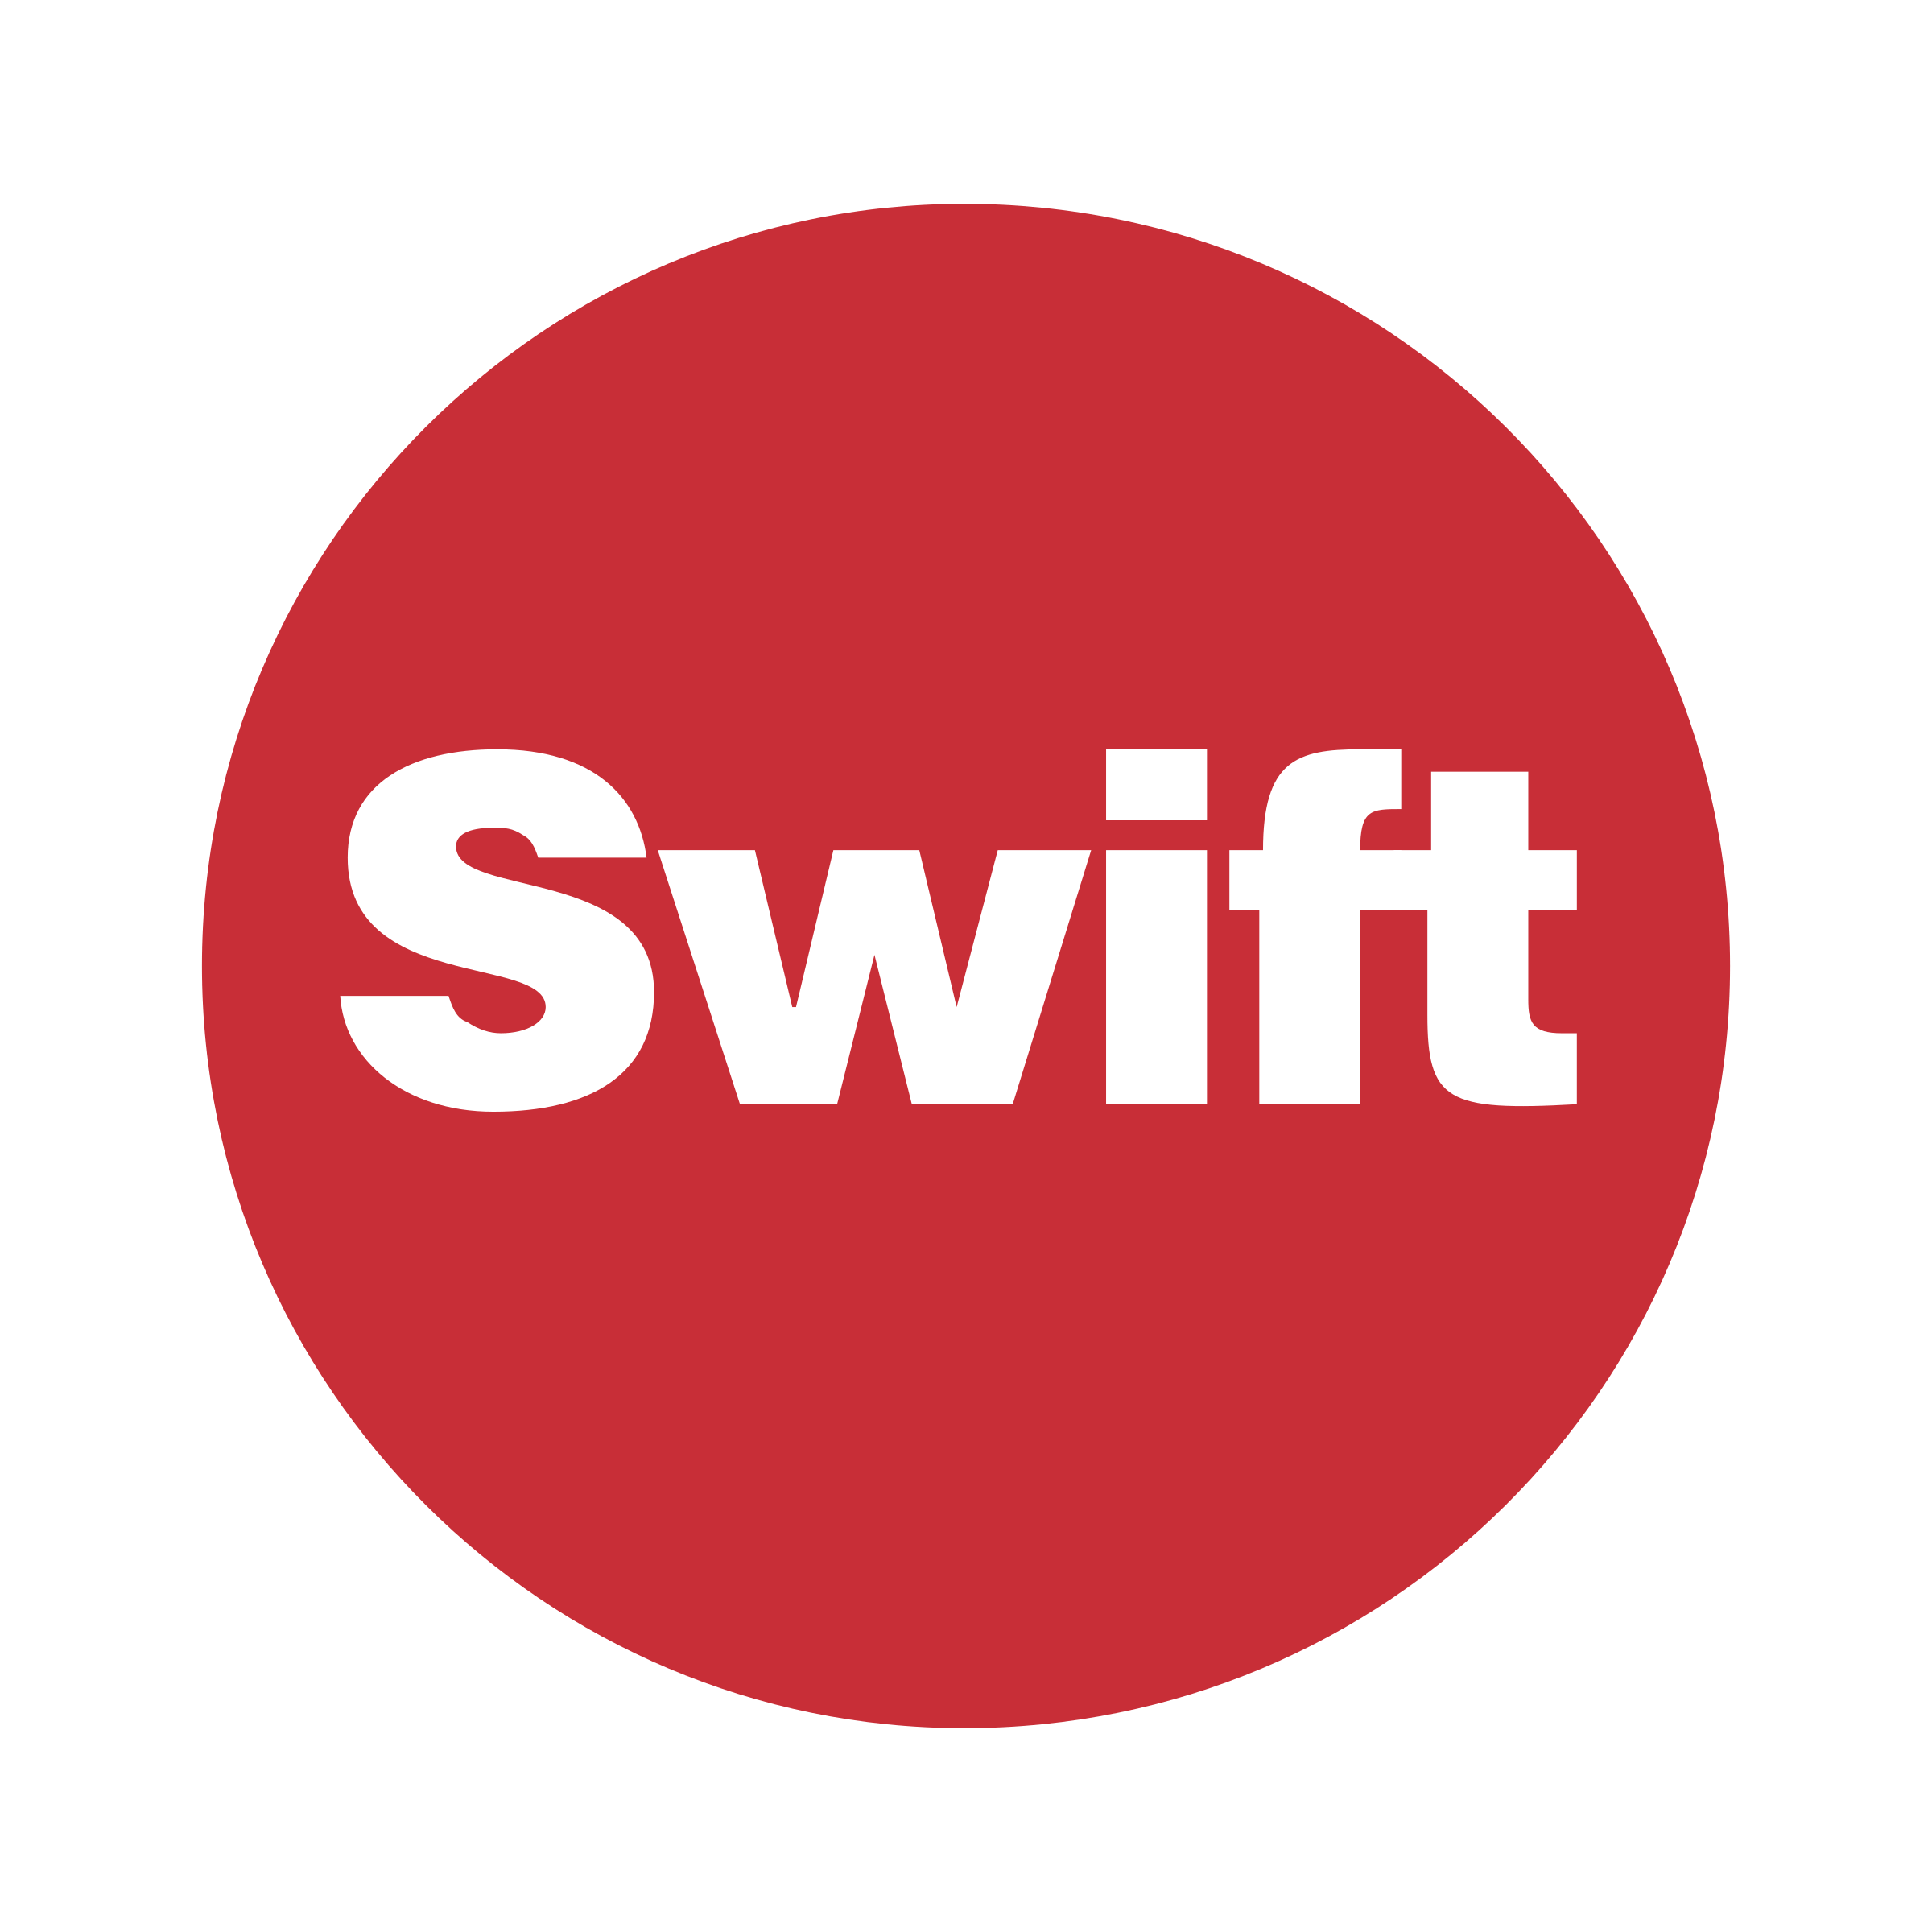 Swift Logo - Swift Logo PNG Transparent & SVG Vector - Freebie Supply